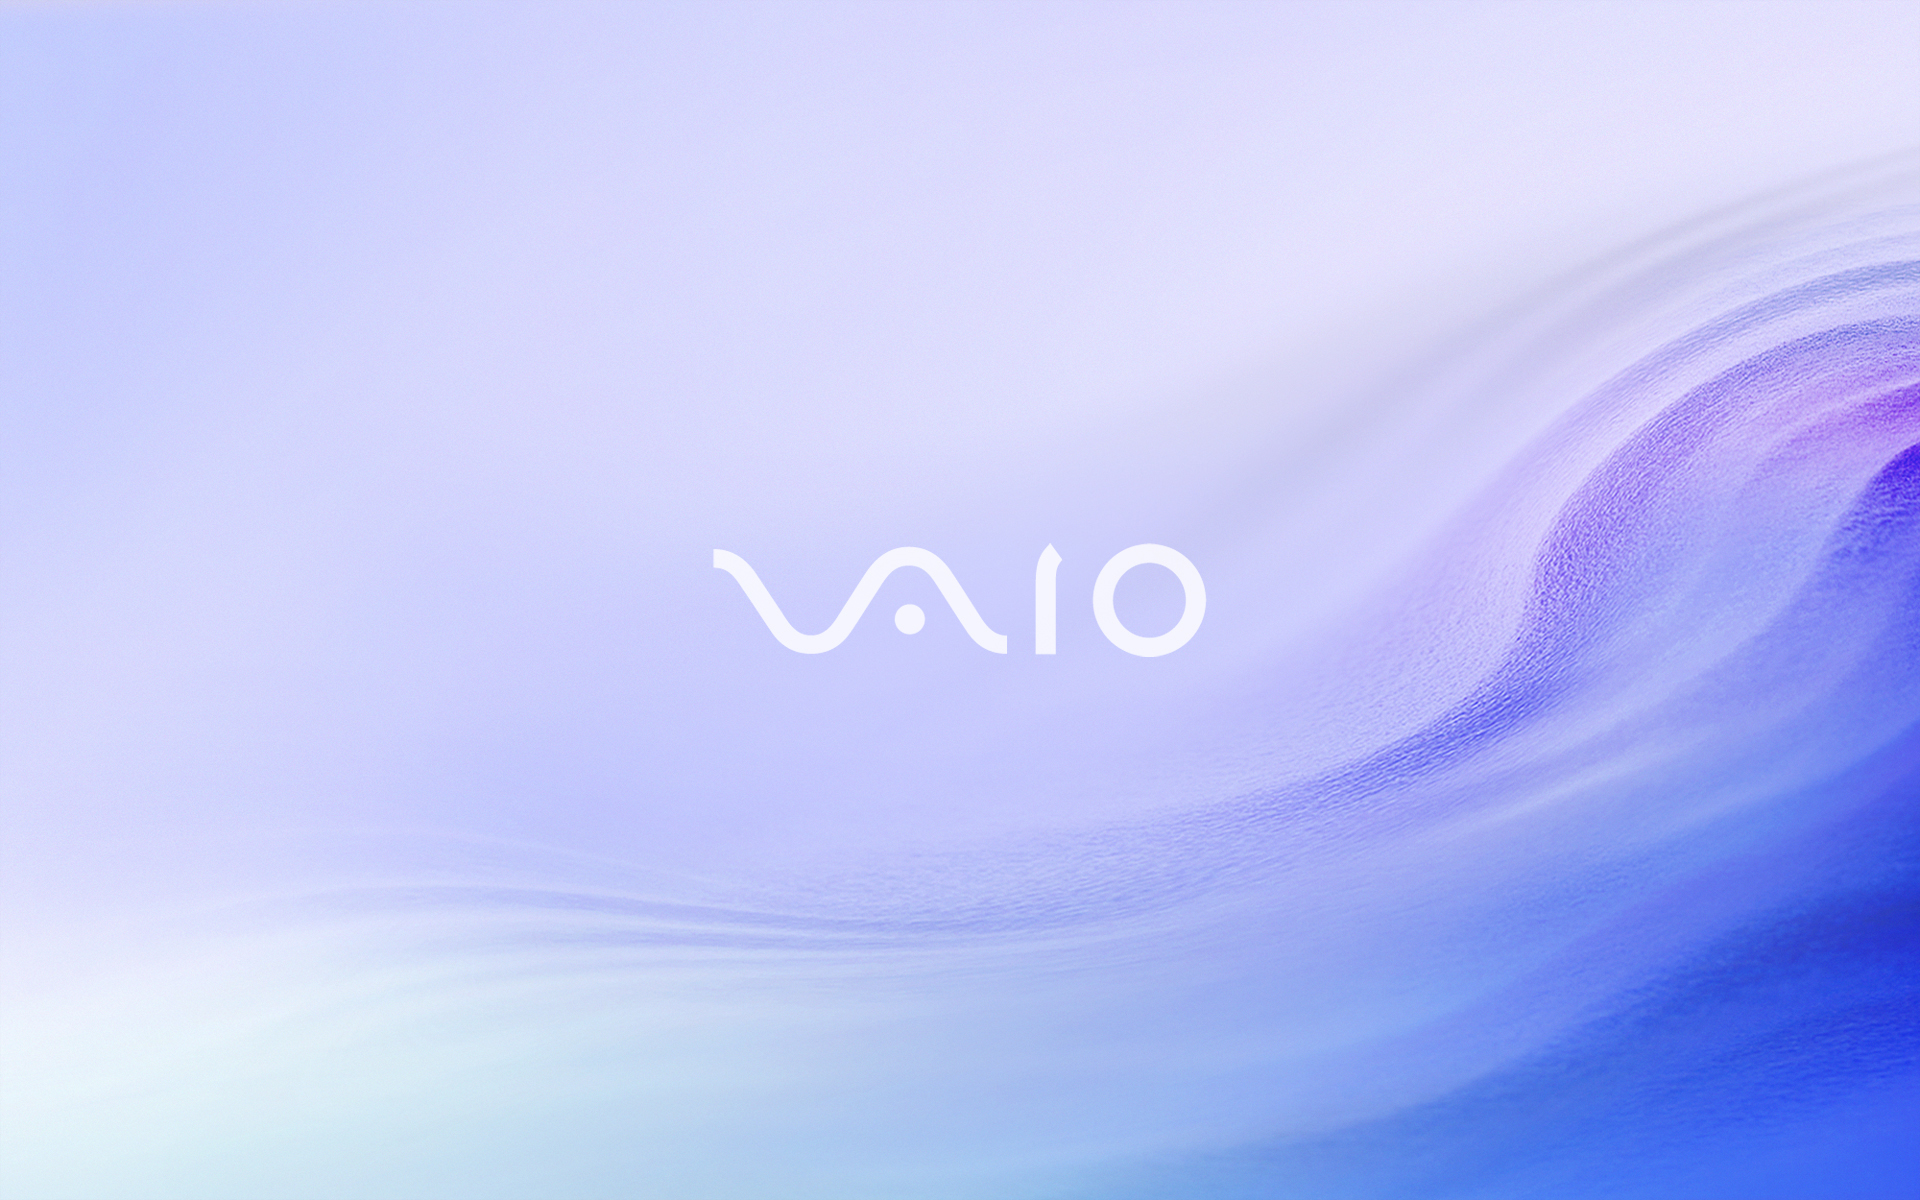 Vaio Light Blue HD Desktop Wallpaper Image And Photos